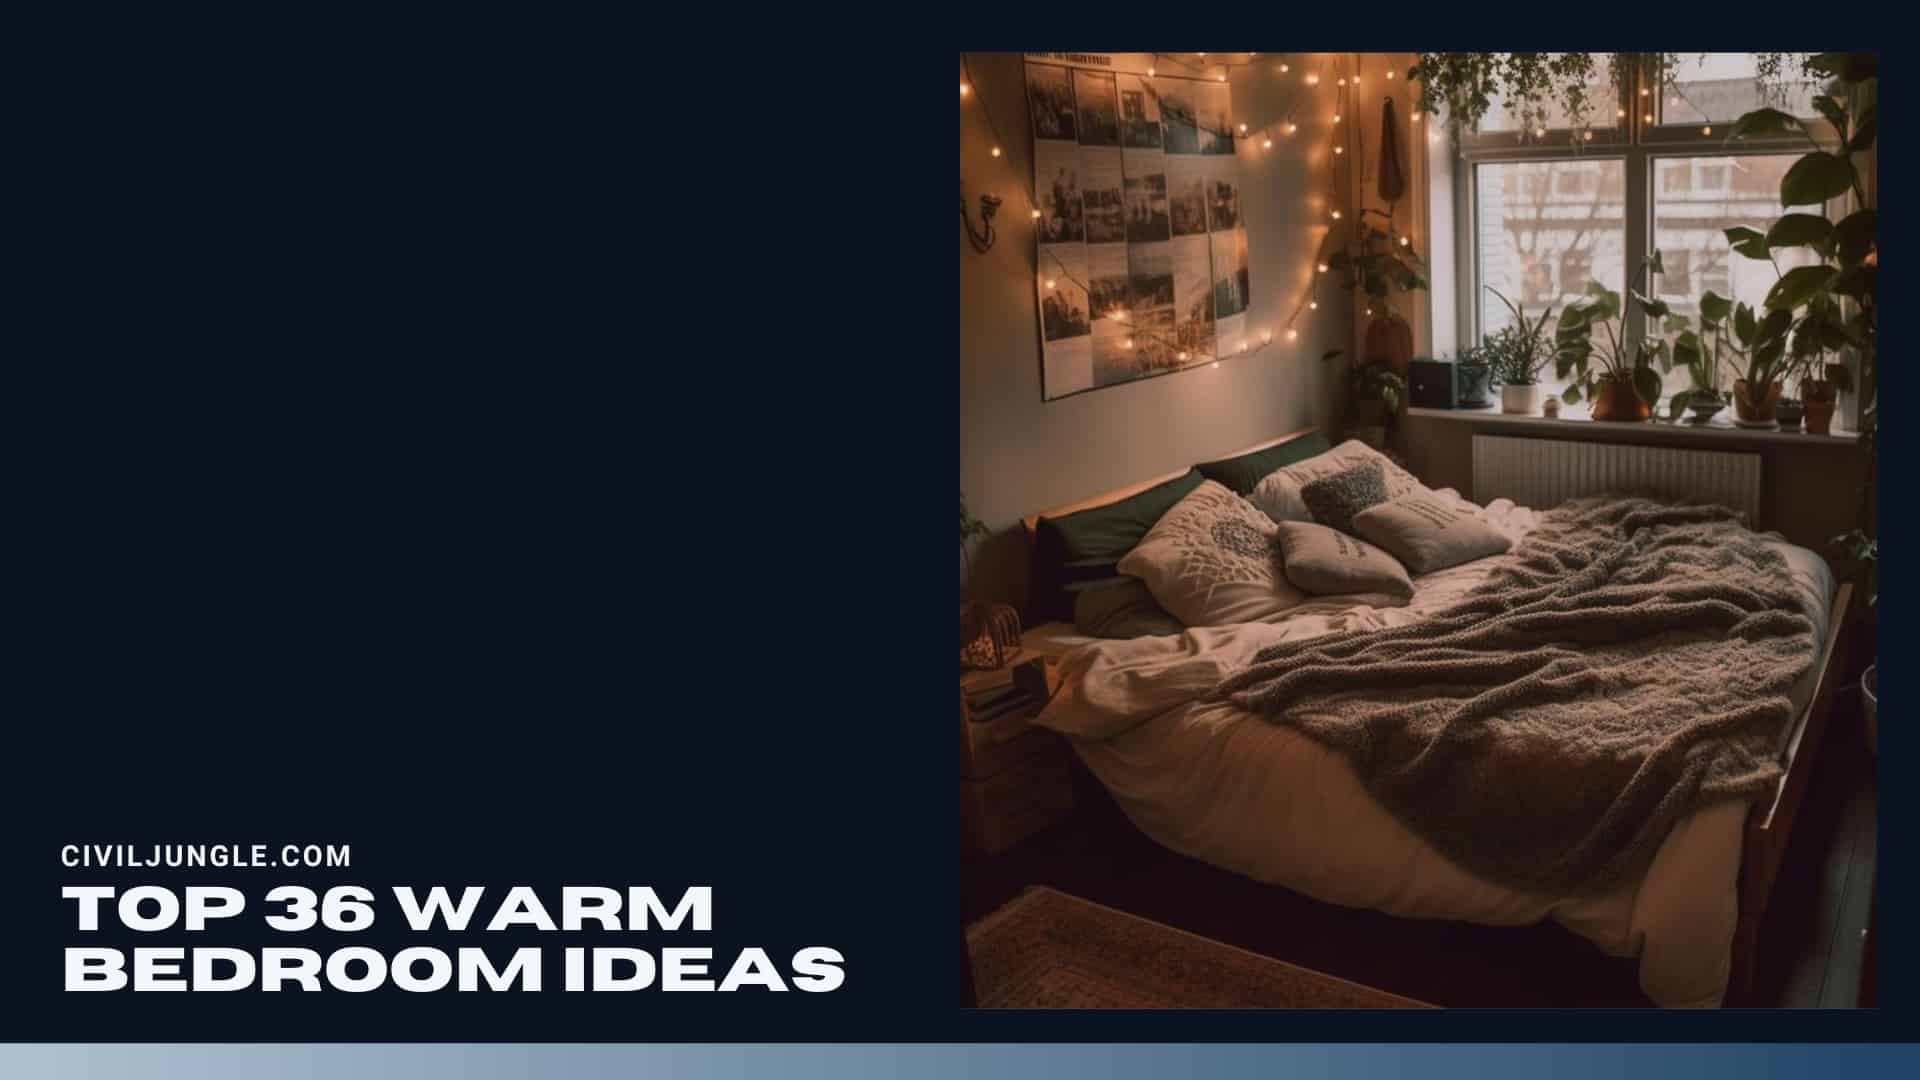 Top 36 Warm Bedroom Ideas